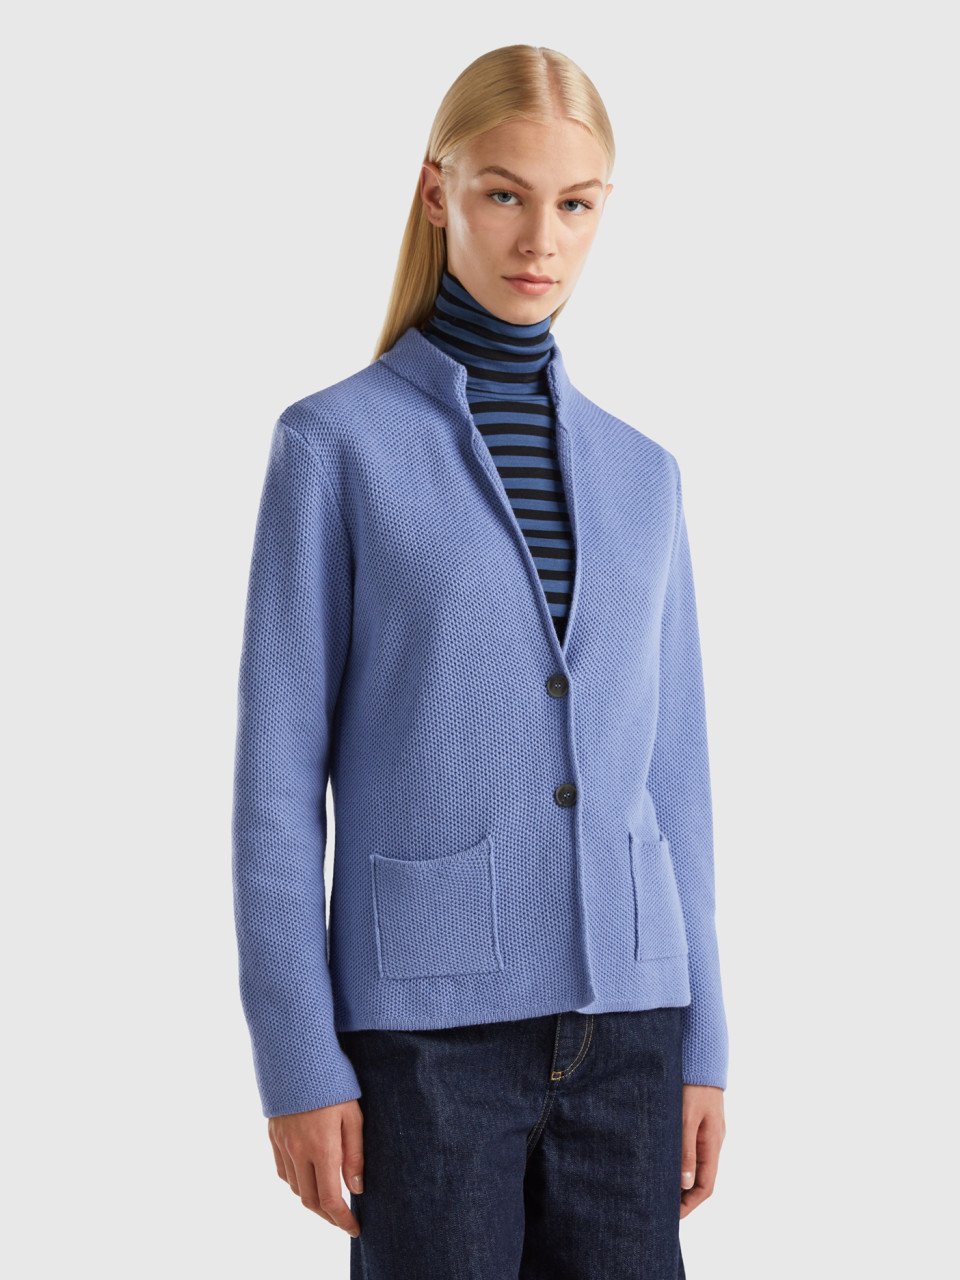 Benetton, Knit Jacket In Wool And Cashmere Blend, Light Blue, Women